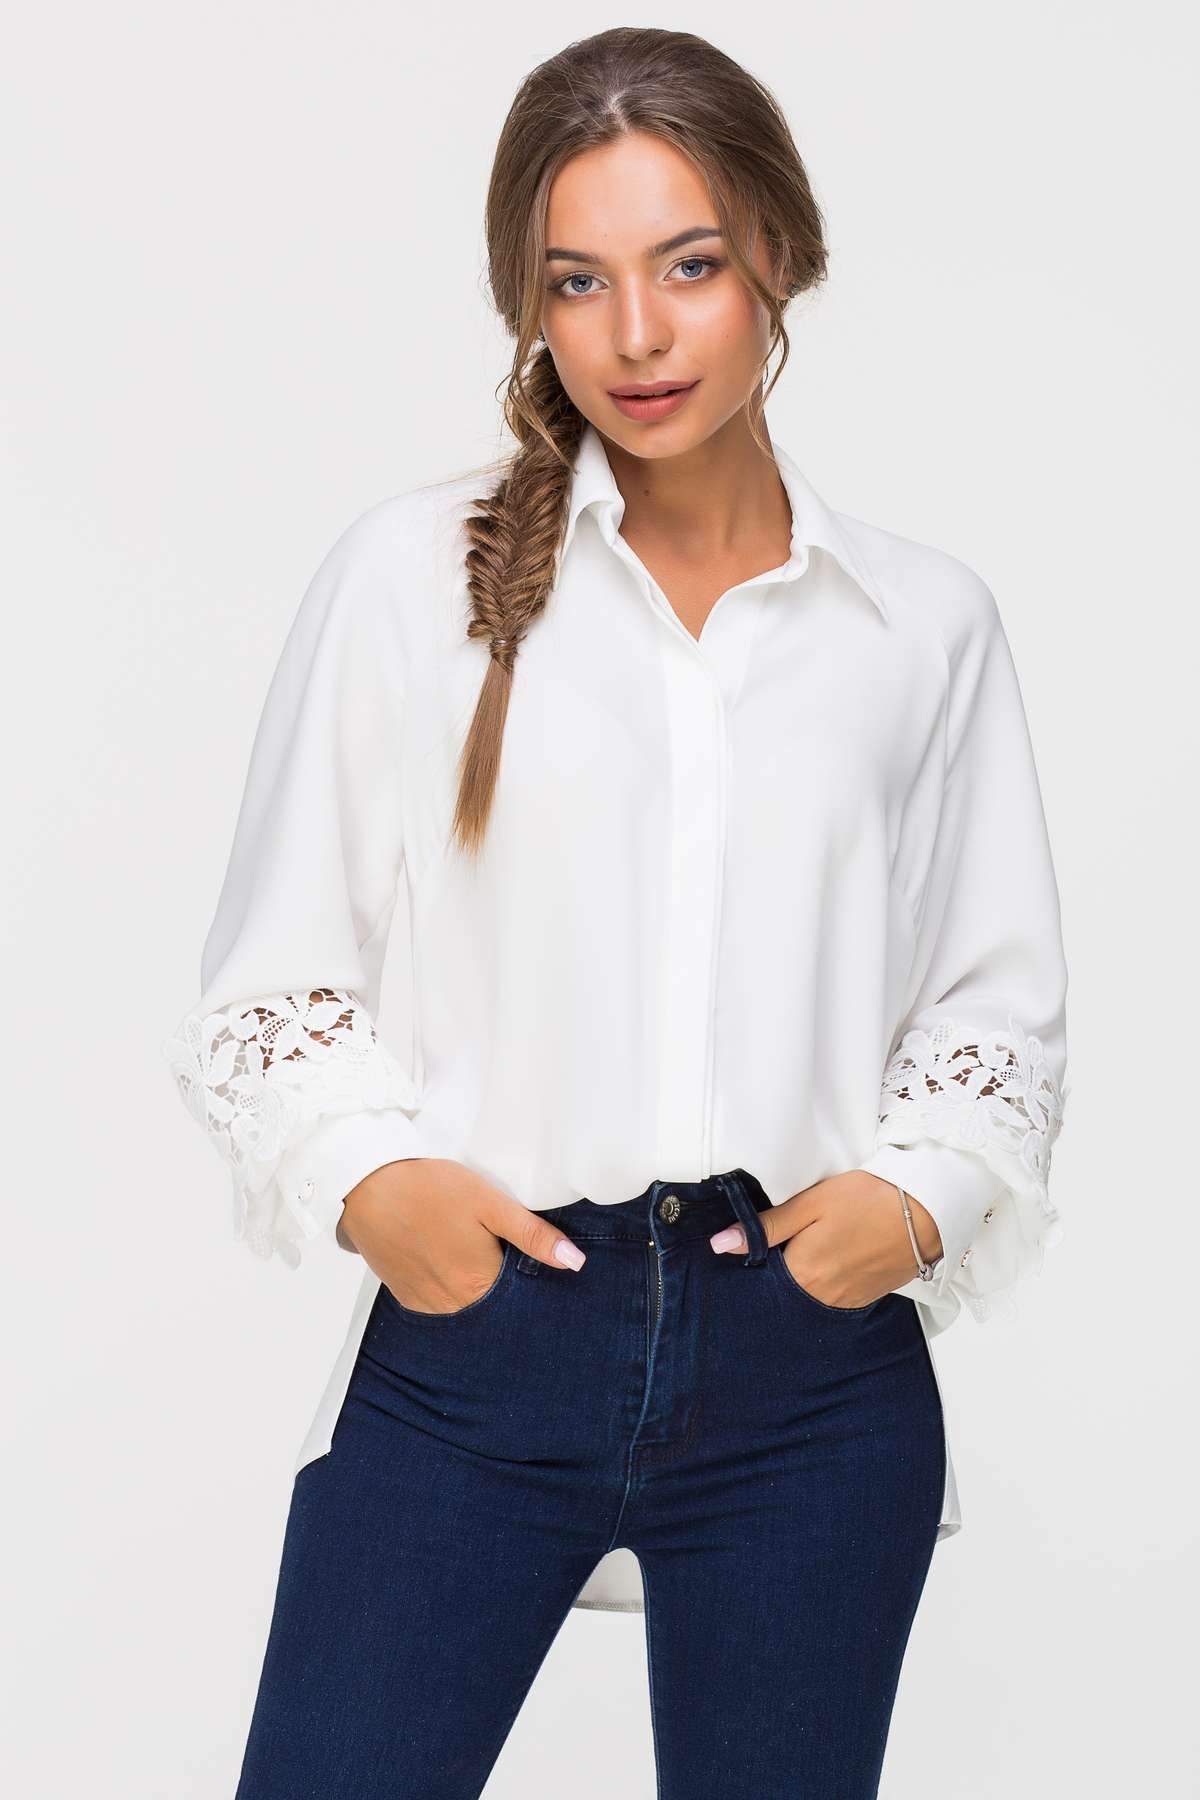 Интернет магазин валберис женские блузка. Блузка белая нарядная. Белая нарядная блузка для женщин. Блузка белая праздничная. Блузки белые женские нарядные.